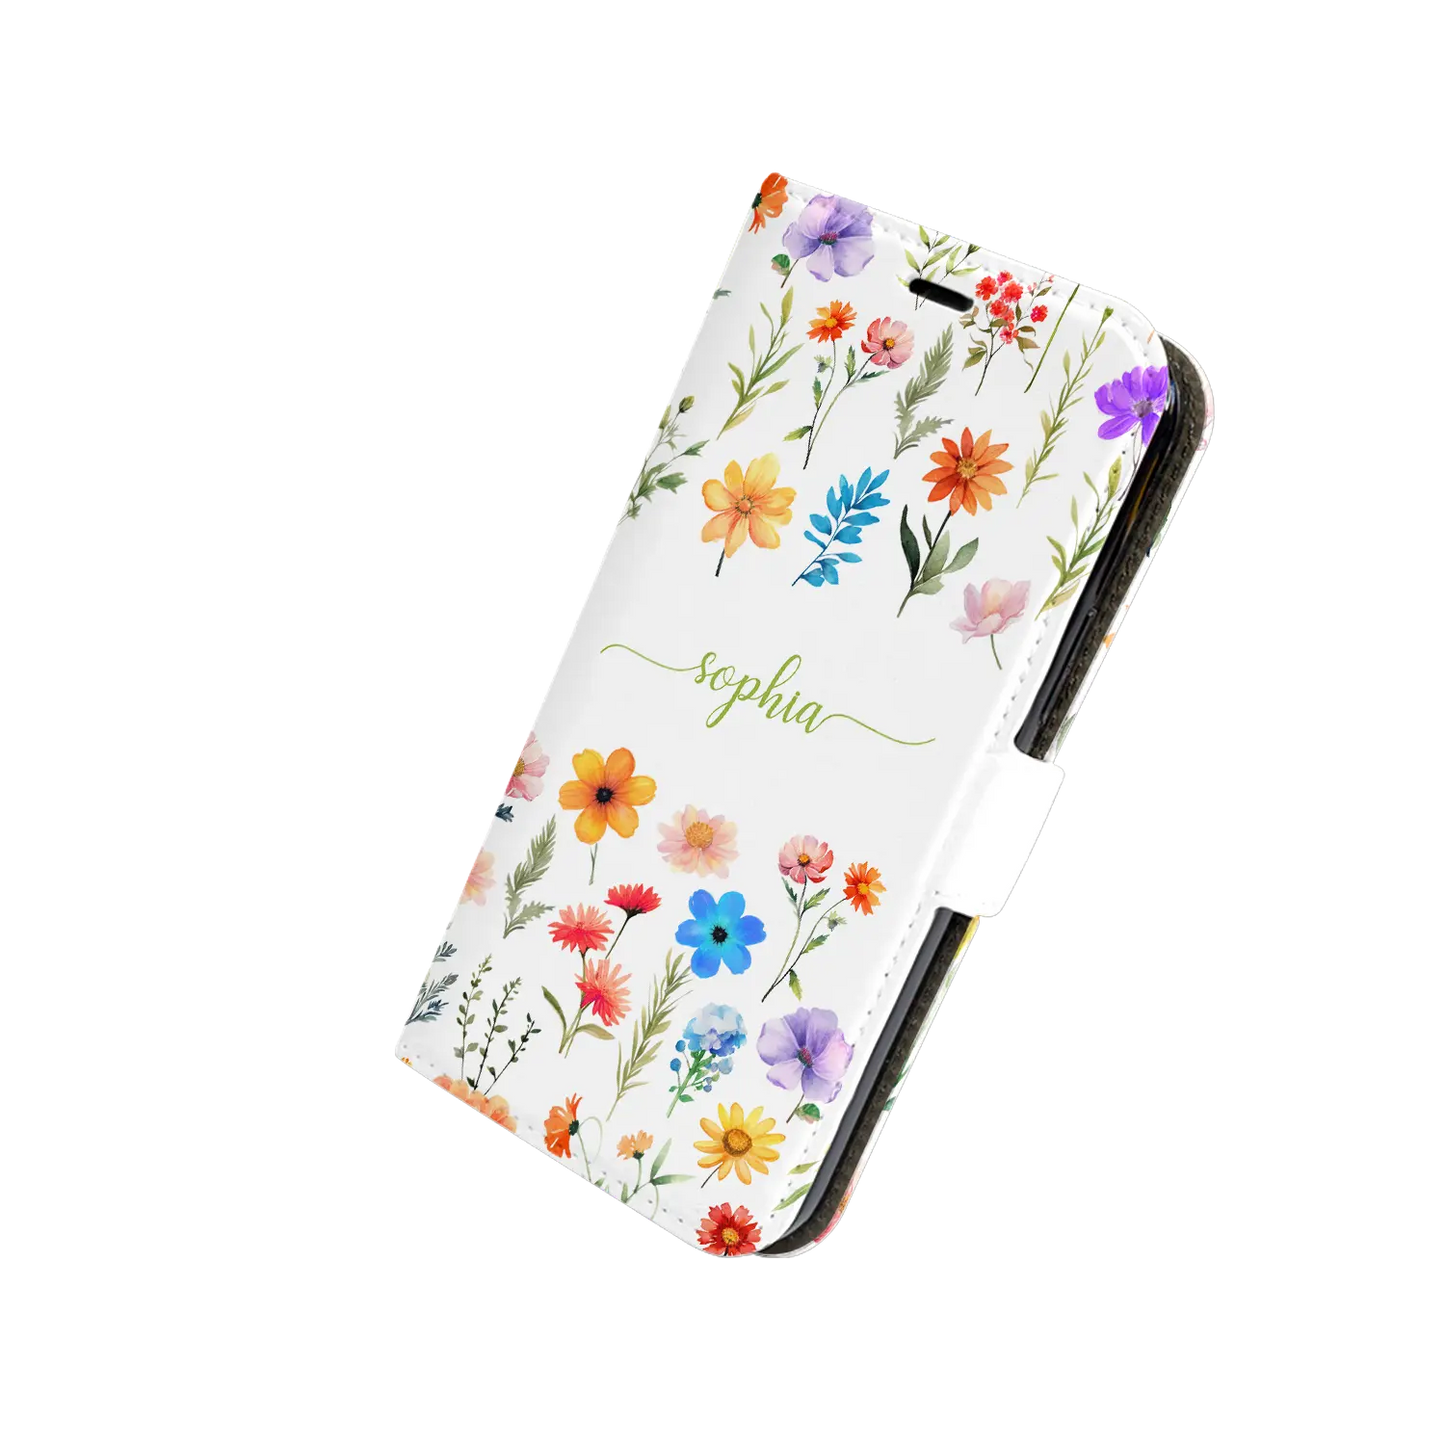 Flowers - Custom iPhone case